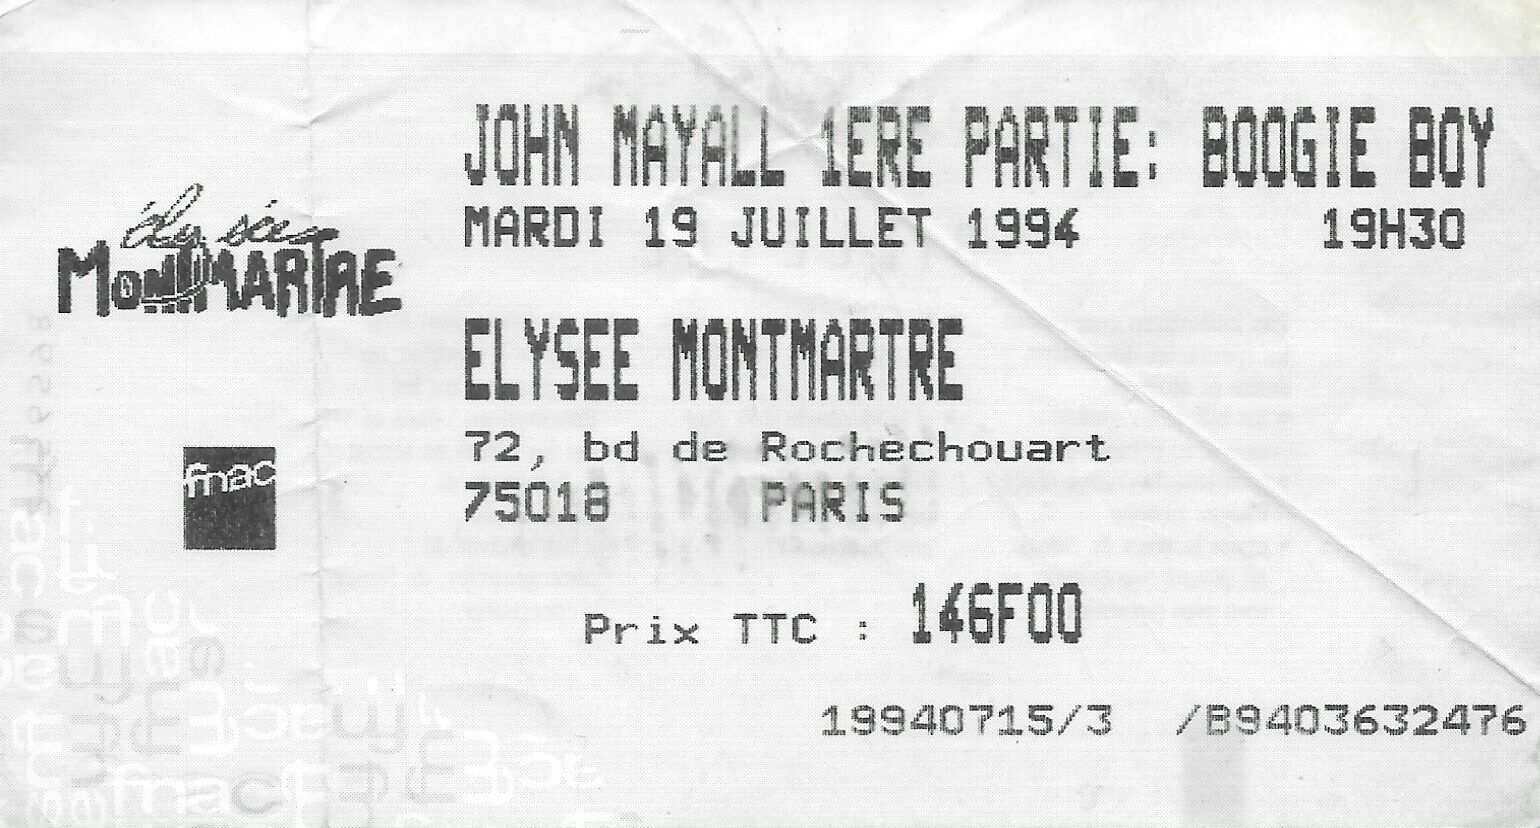 1994 John Mayall Elysée Montmartre Concert Ticket